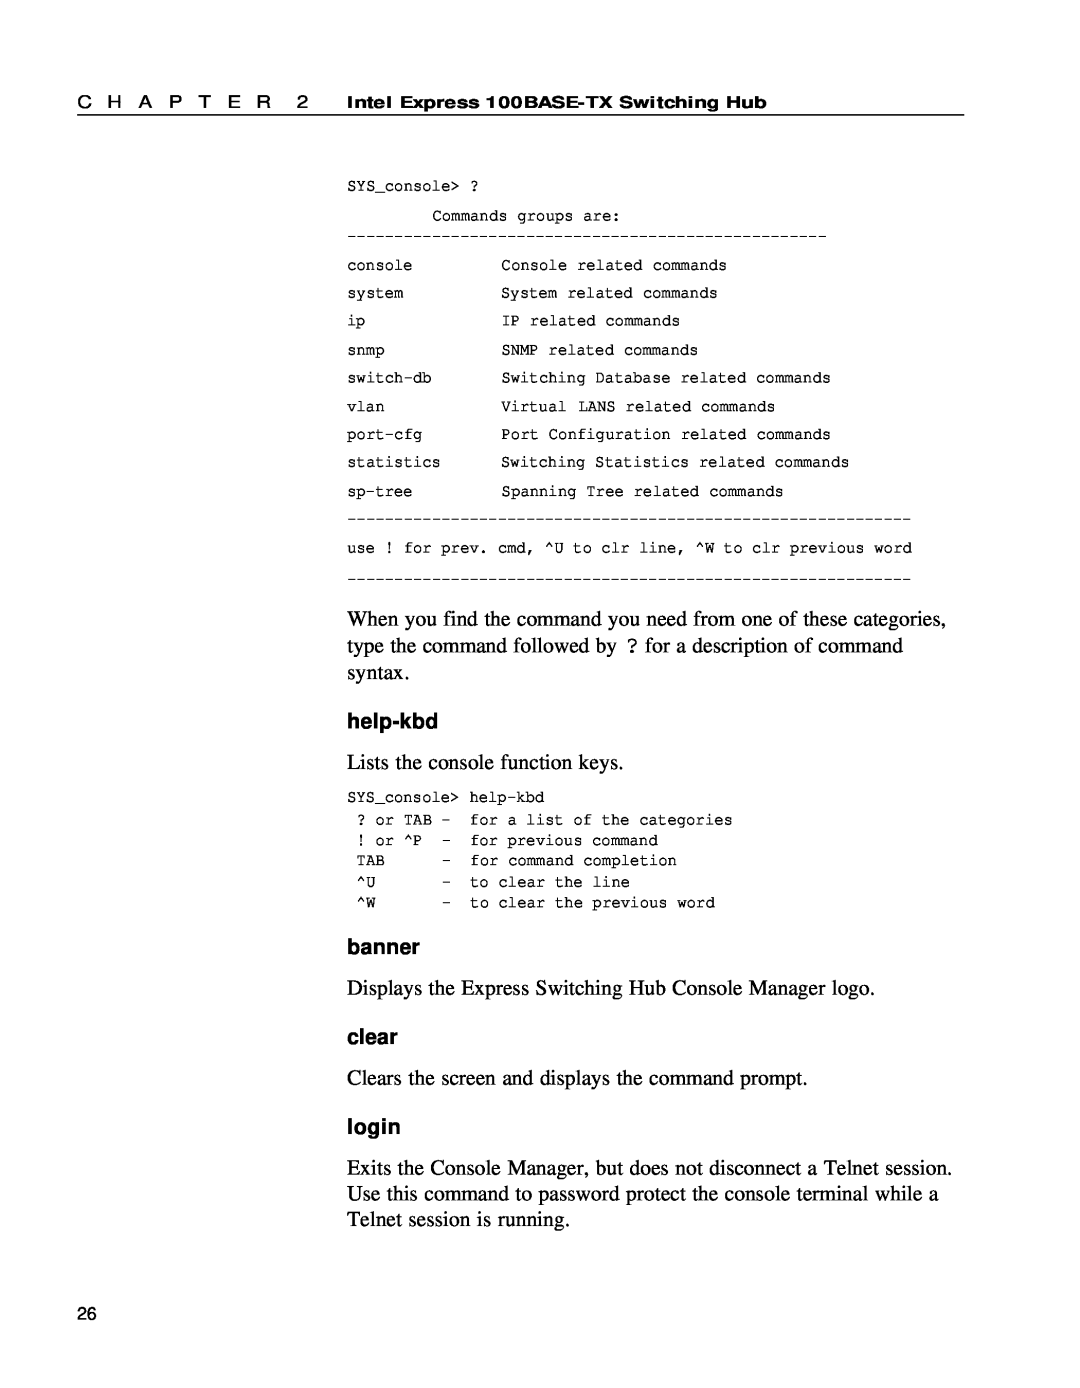 Intel 654655-001 manual help-kbd, banner, clear, login 